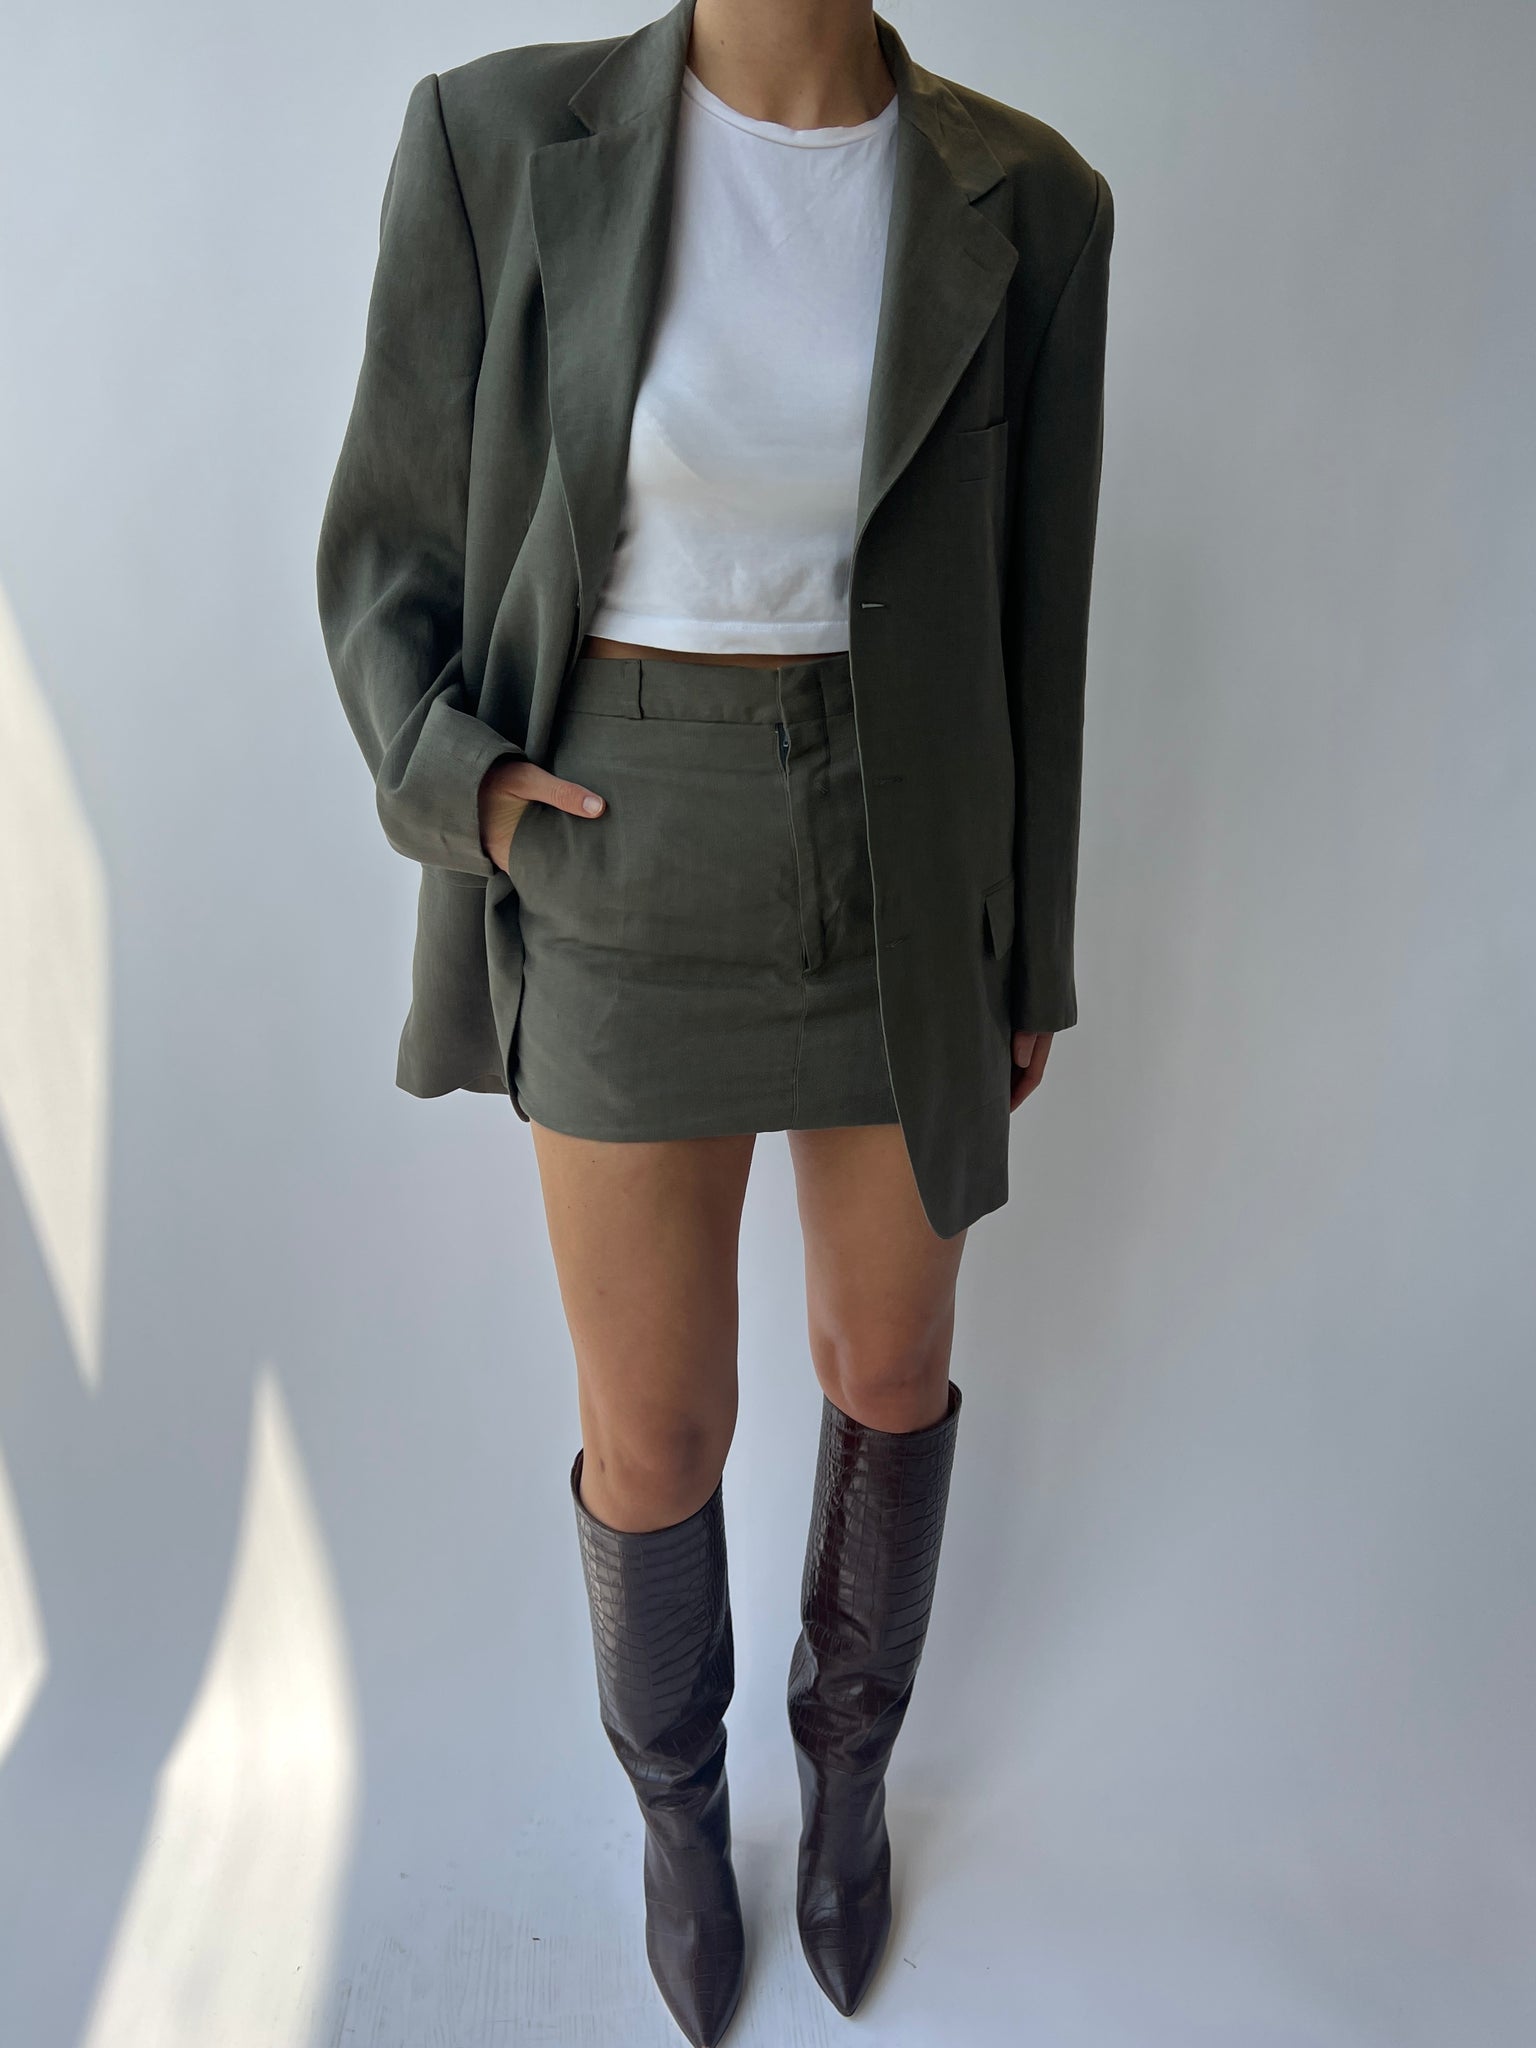 Green linen mini skirt and blazer